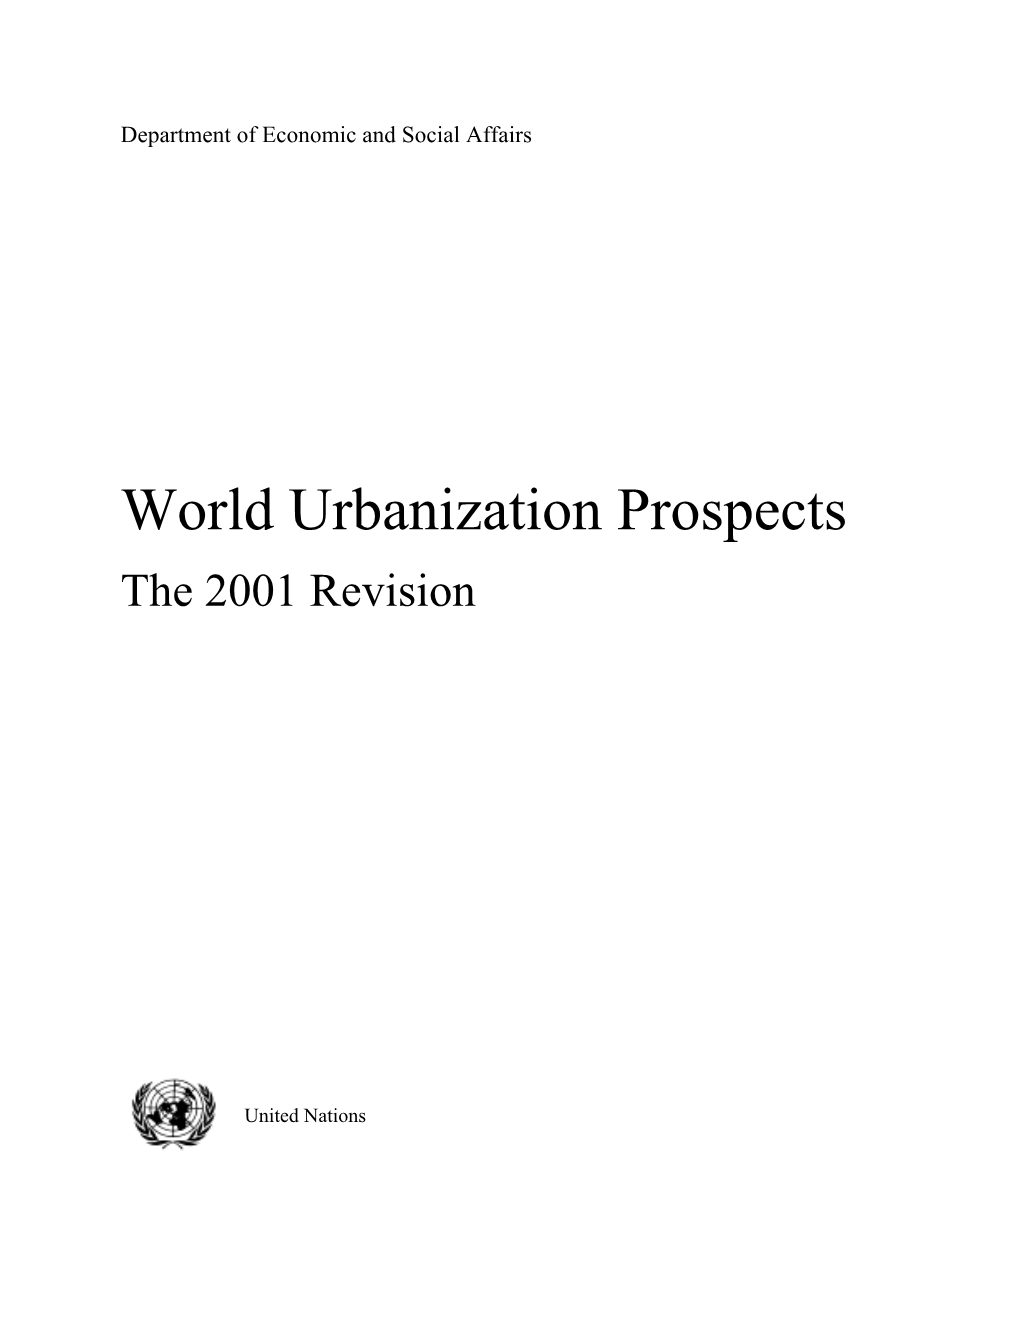 World Urbanization Prospects the 2001 Revision